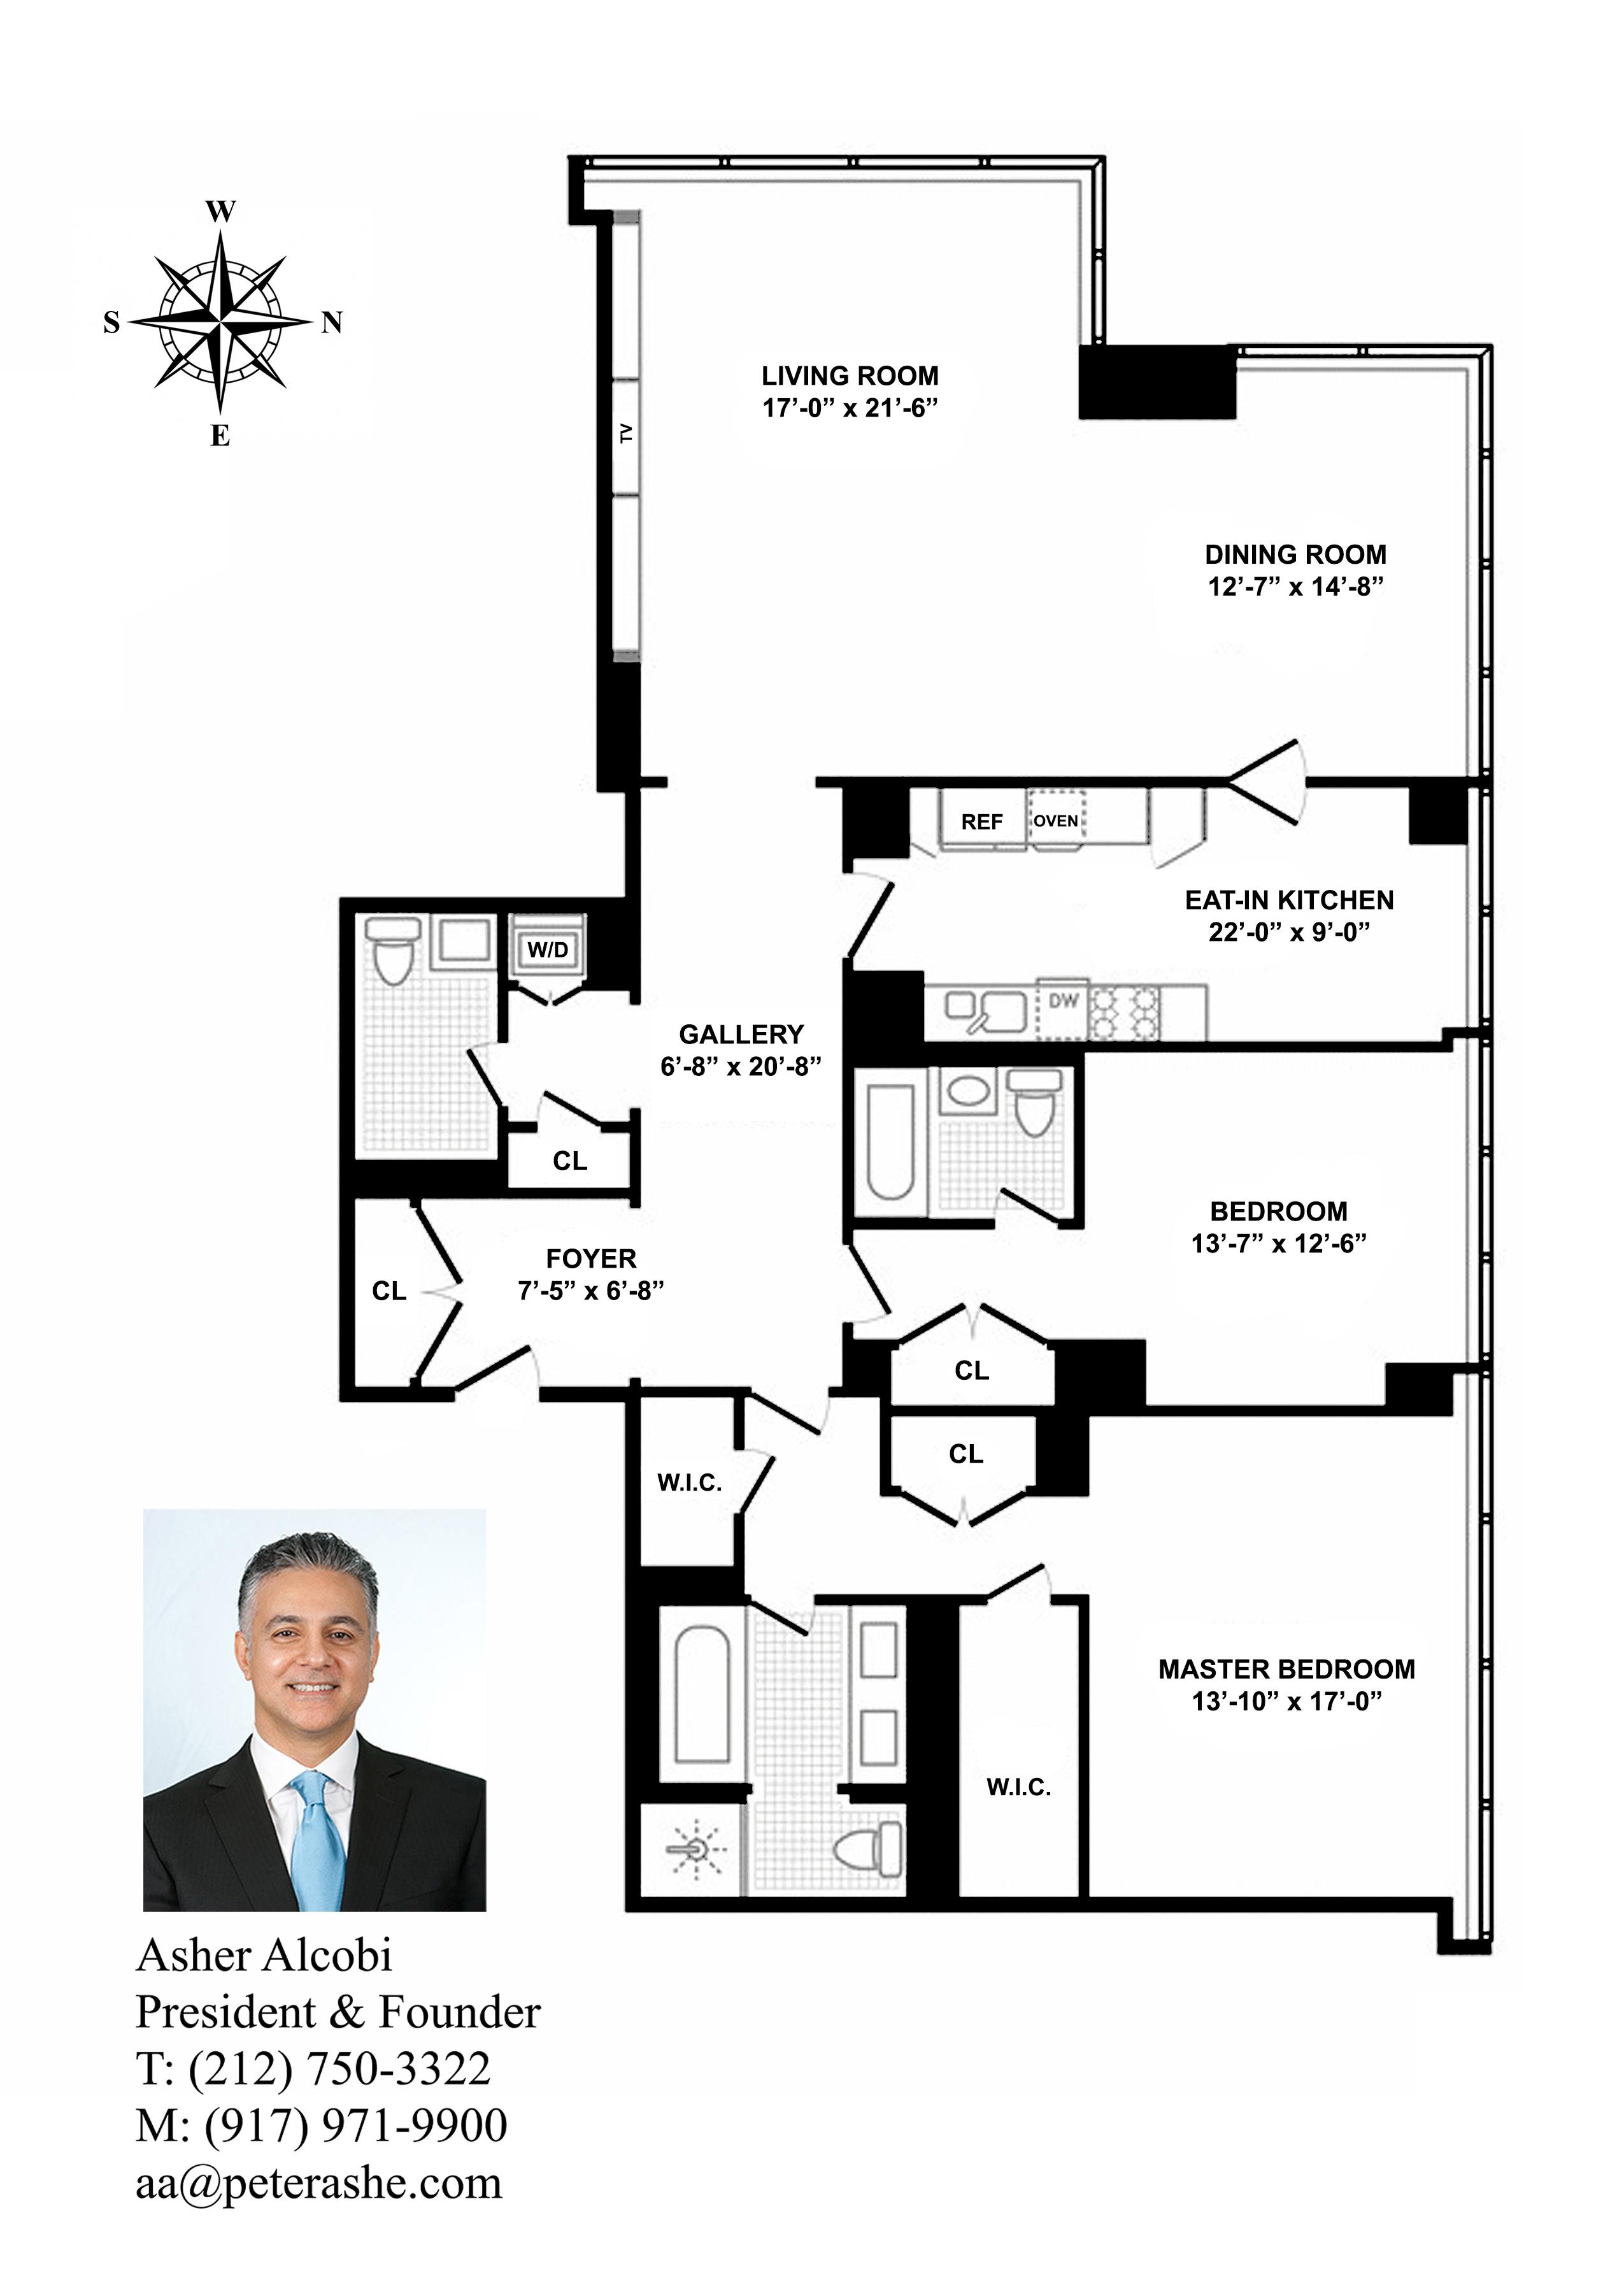 Floorplan for 151 East 58th Street, 35-A